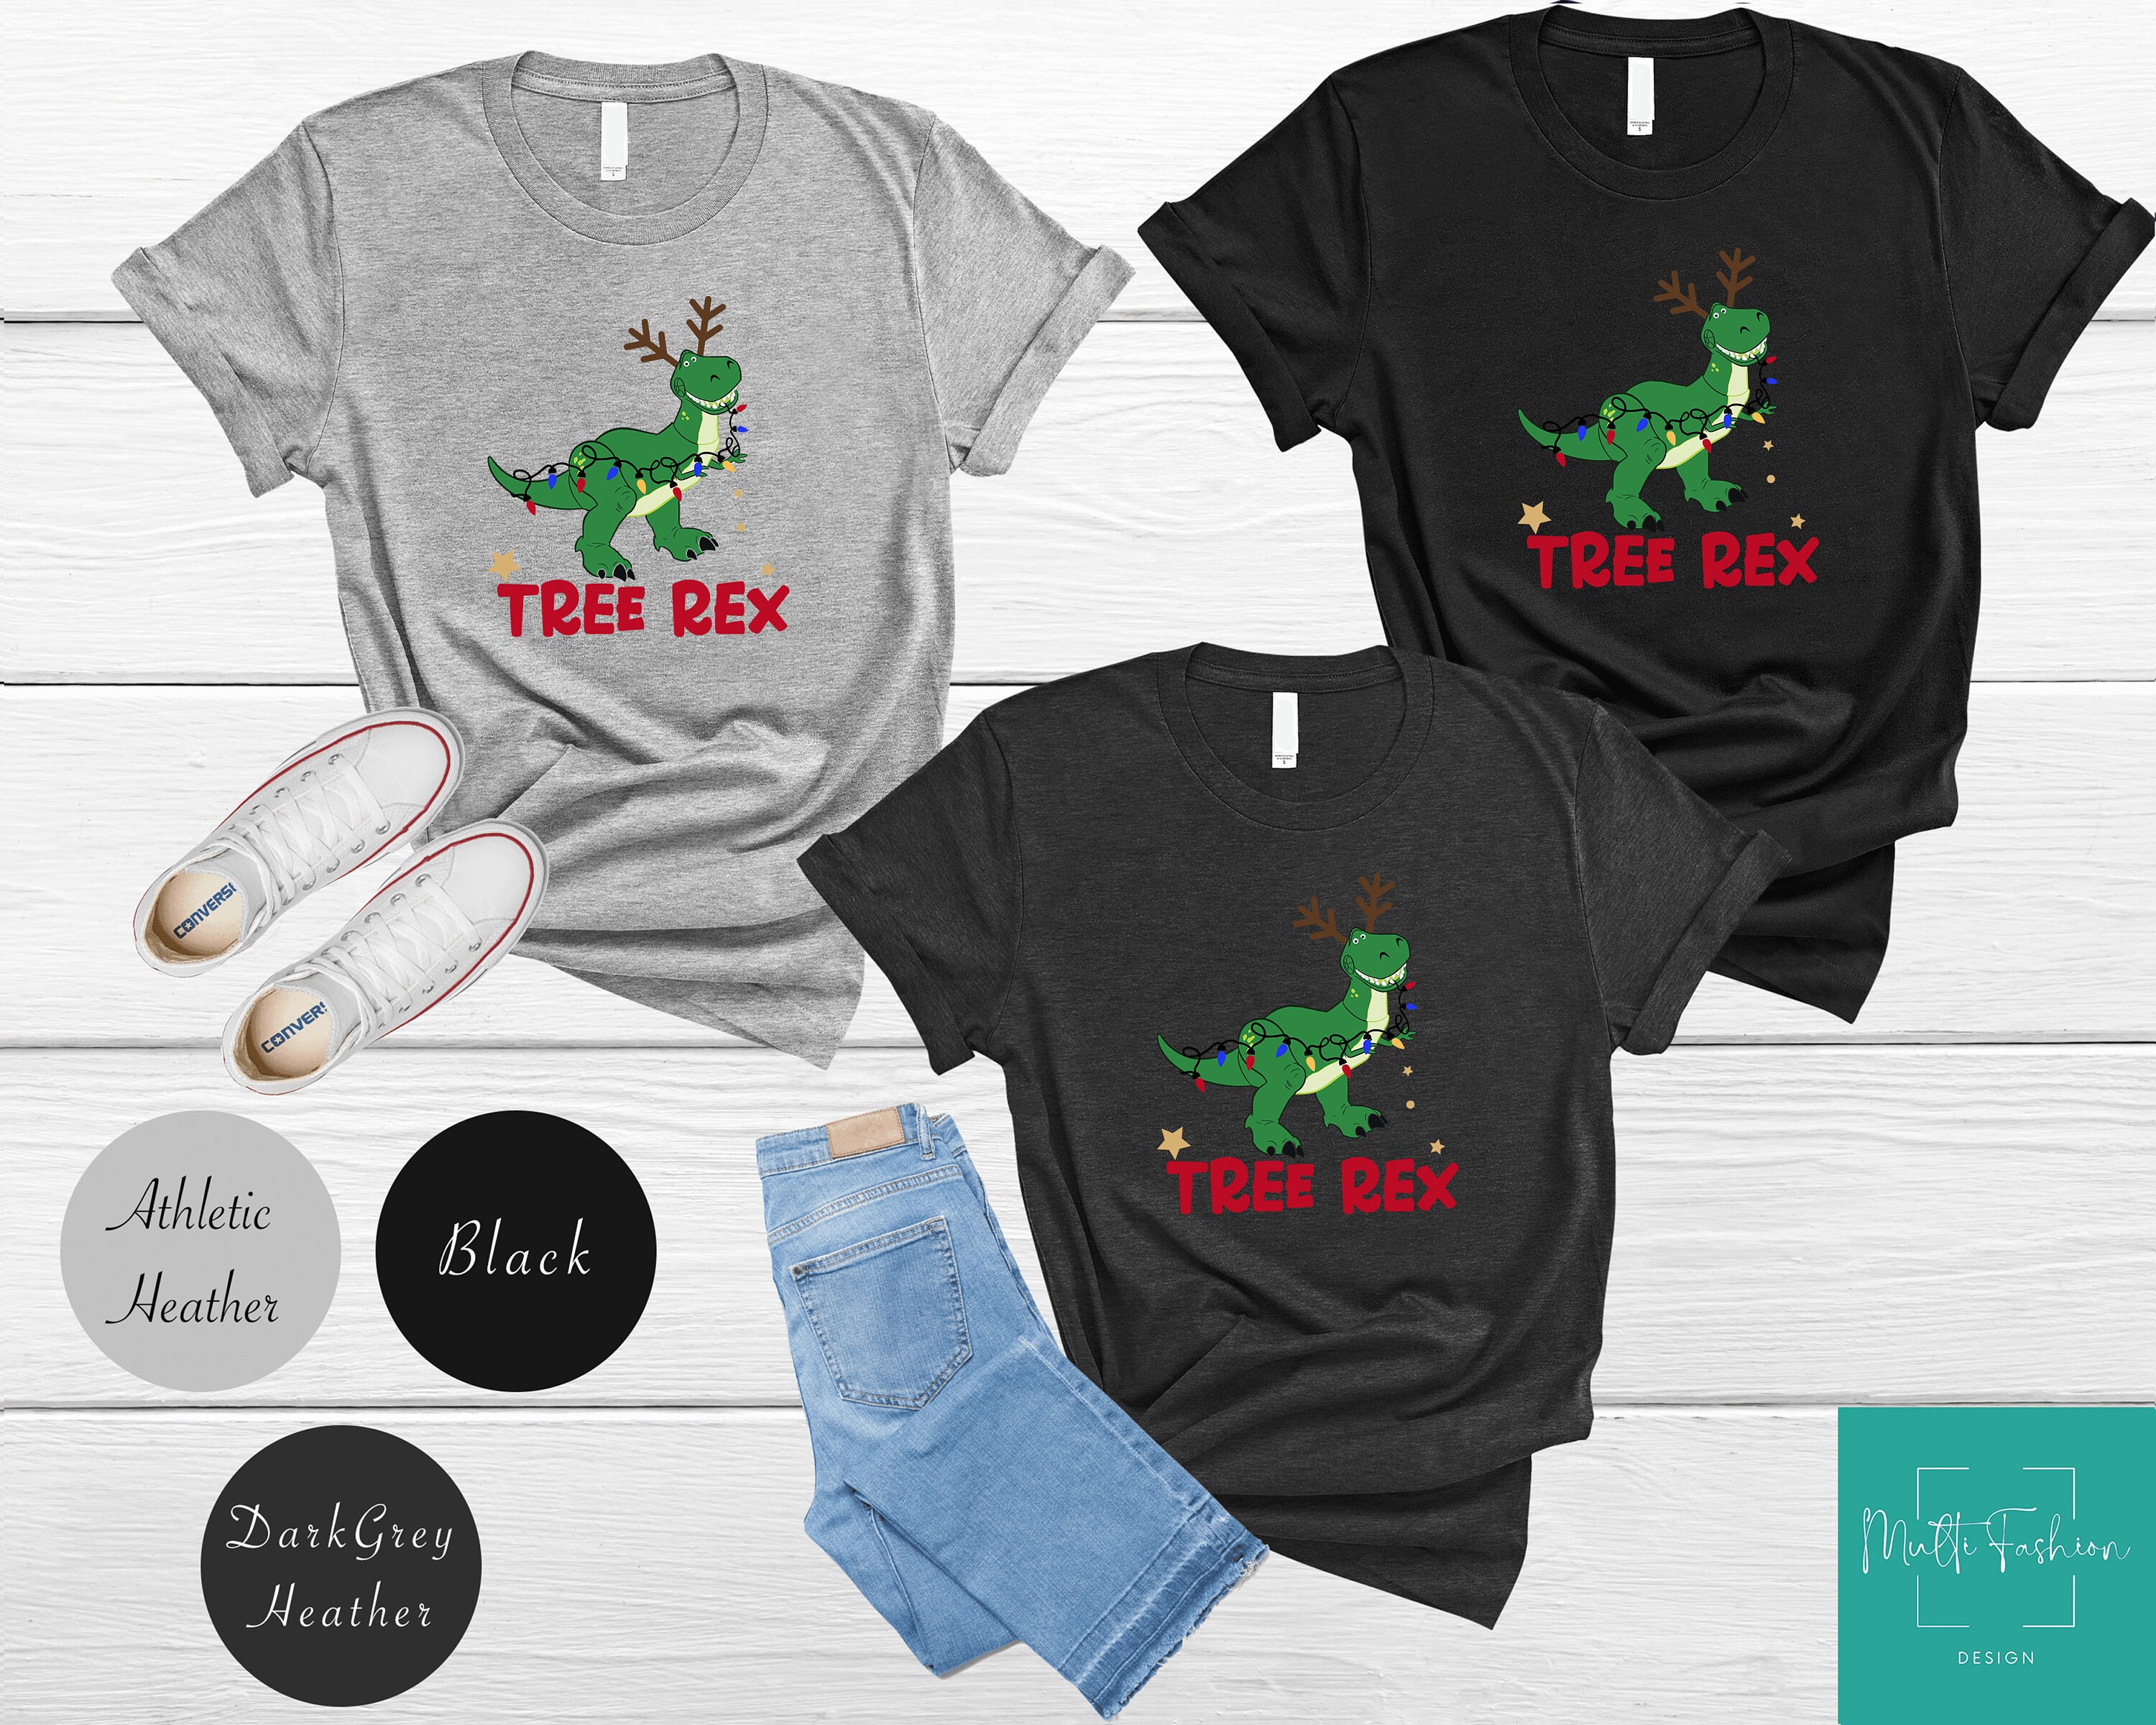 Discover Tree Rex Christmas T-shirt, T-Rex Christmas Shirt ,Christmas Dinosaur Tee, Christmas Shirt, Gift For Christmas, Funny Christmas Party Shirt